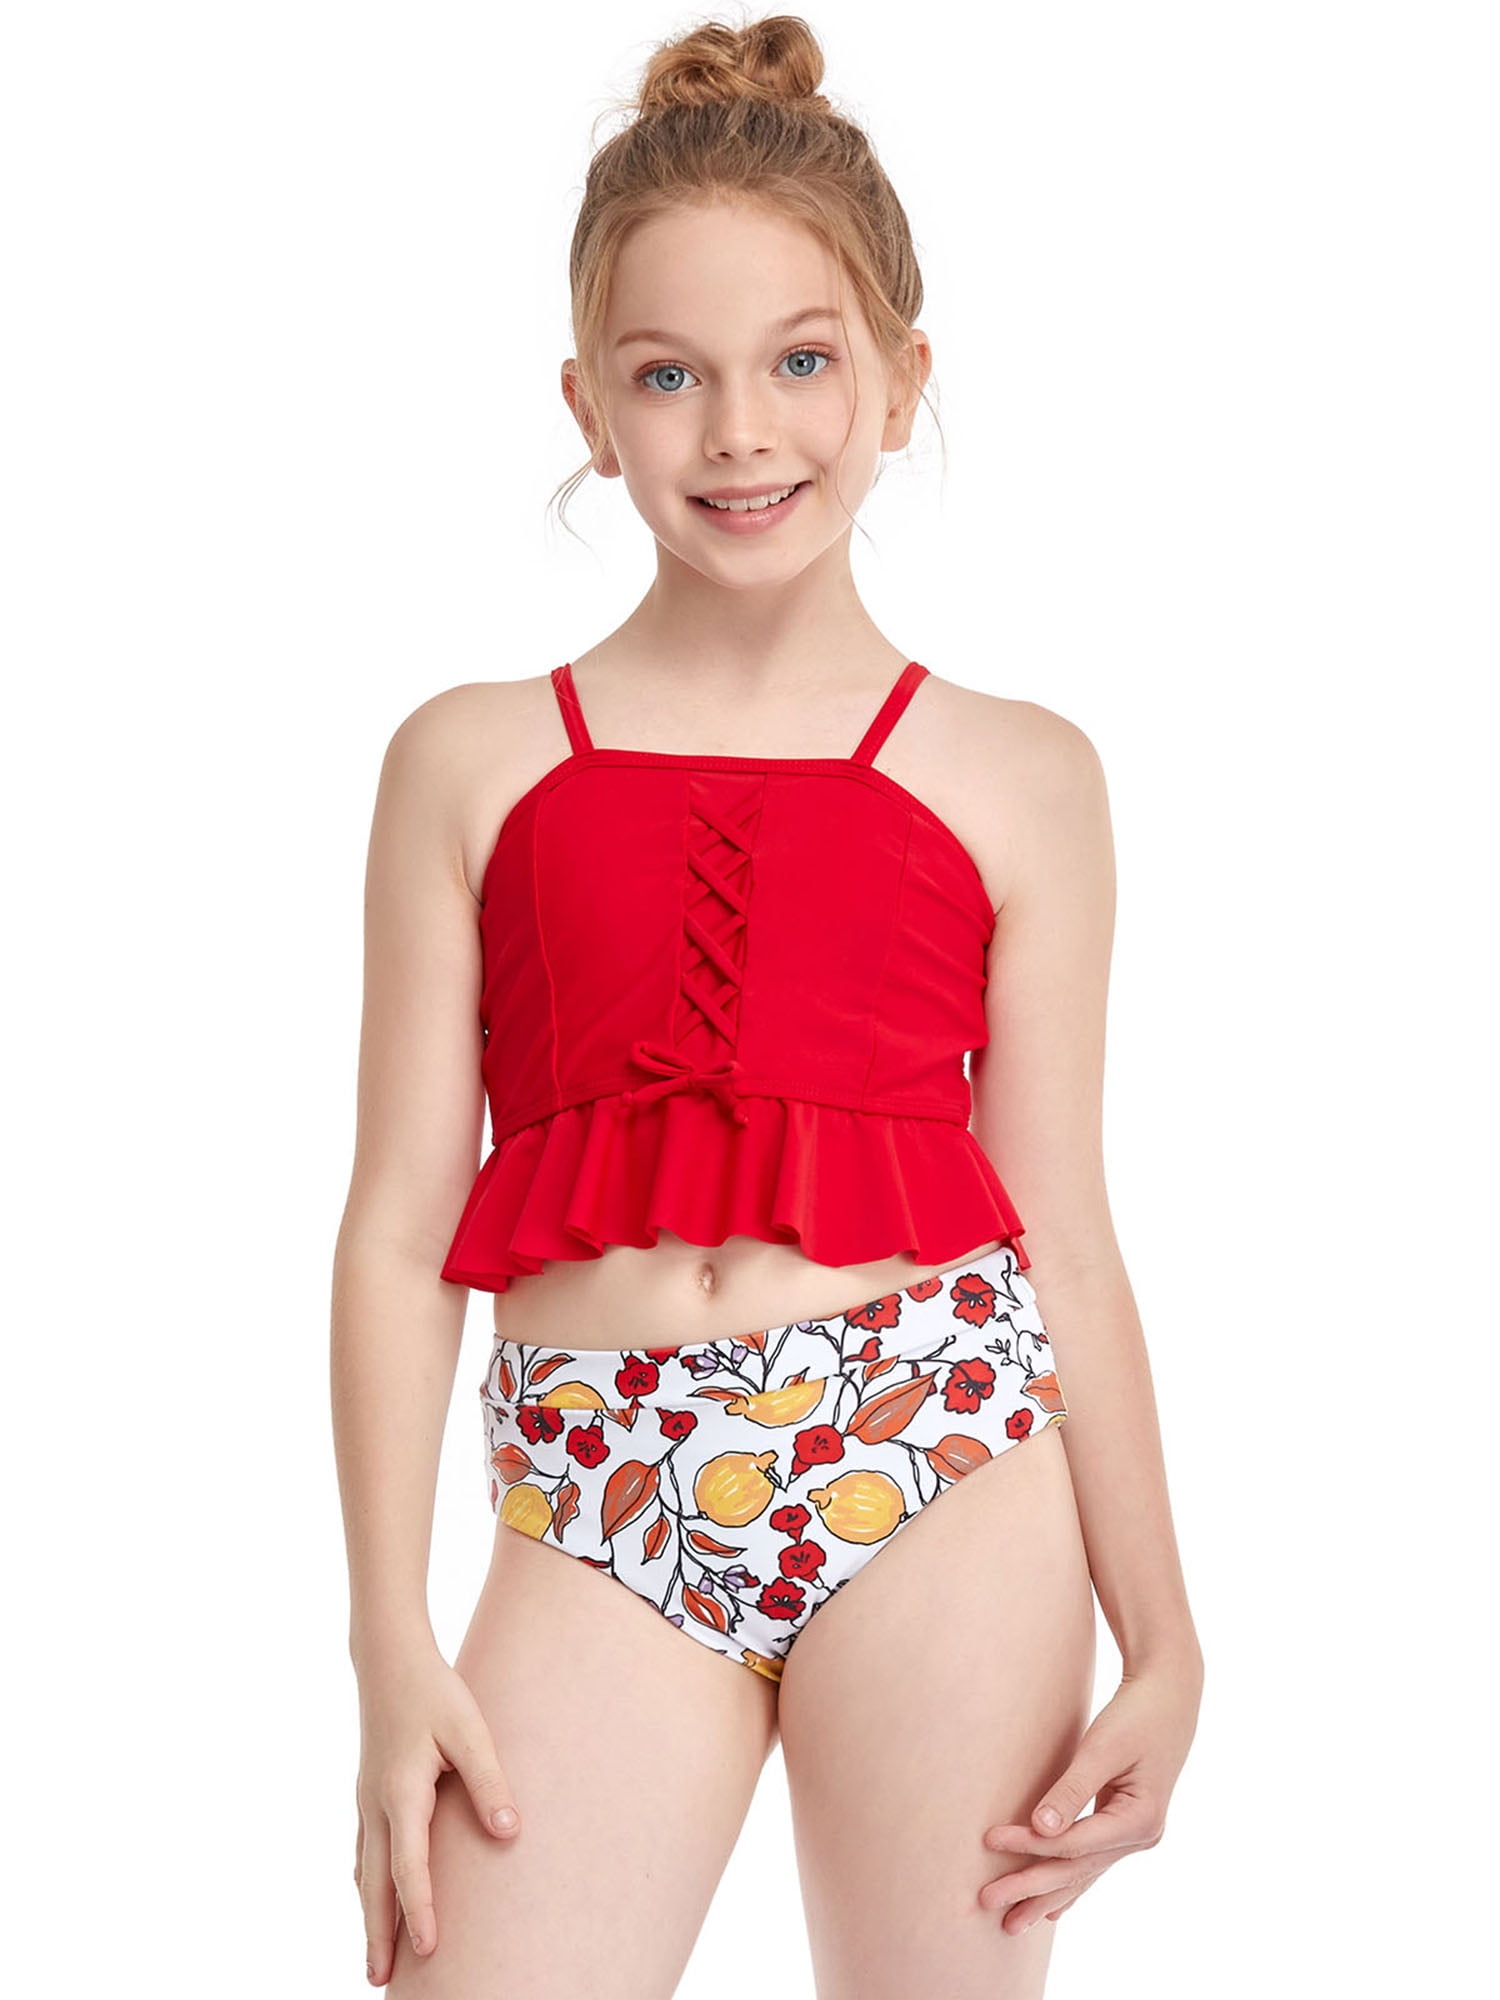 Biayxms Parent Child Bikini Set Ruffle Camisole And Print Panty Swimsuit Two Piece Suit For Vacation Swimming Beach Walmart Com Walmart Com